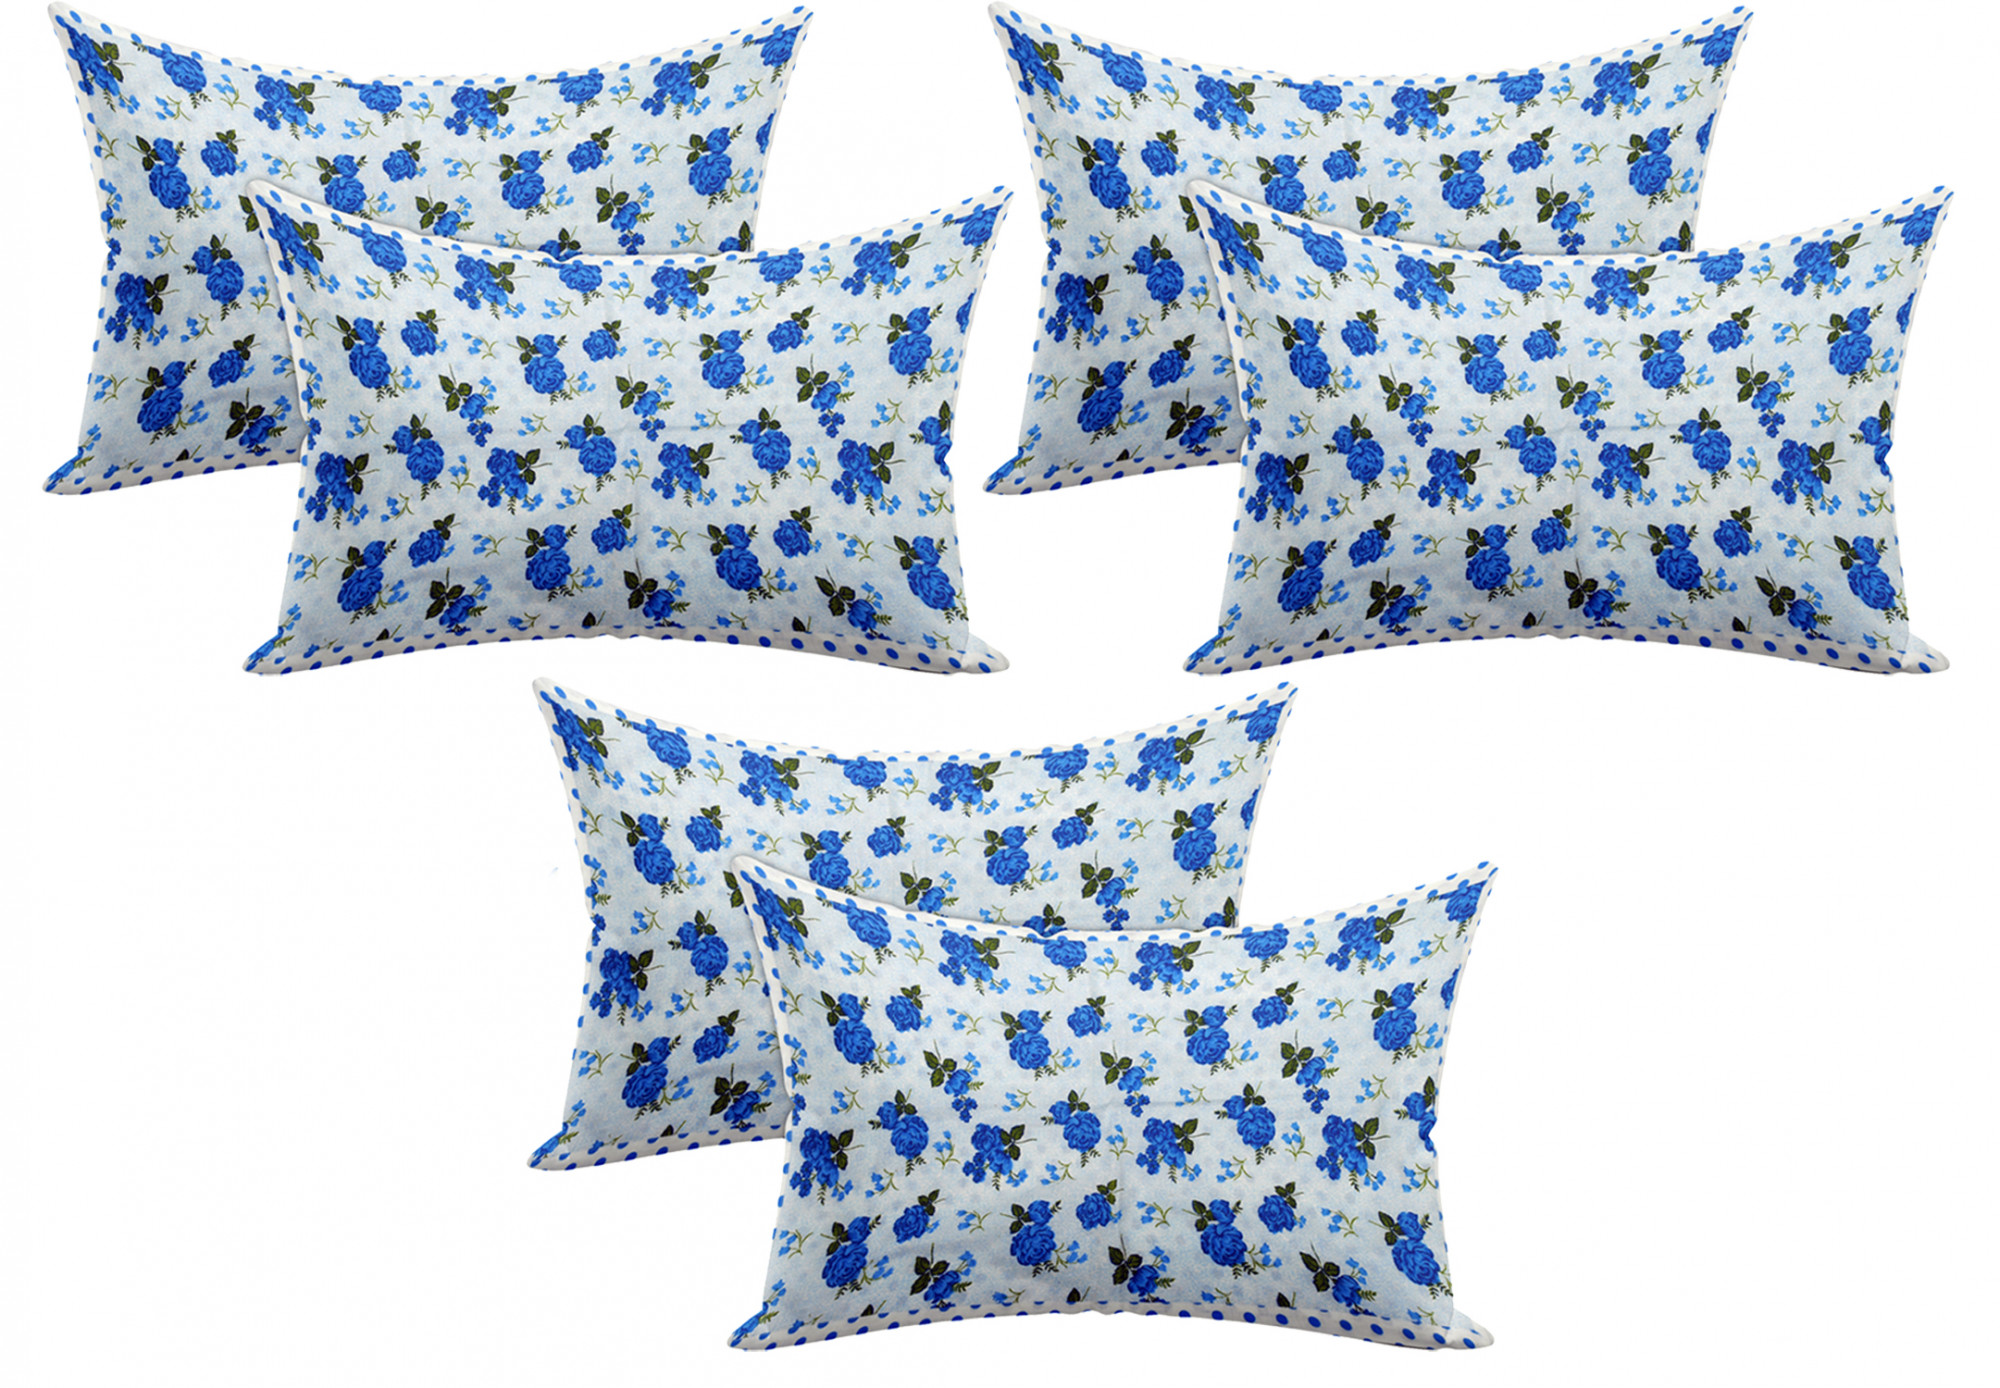 Kuber Industries Flower Design Premium Cotton Pillow Covers, 18 x 28 inch,(Blue)